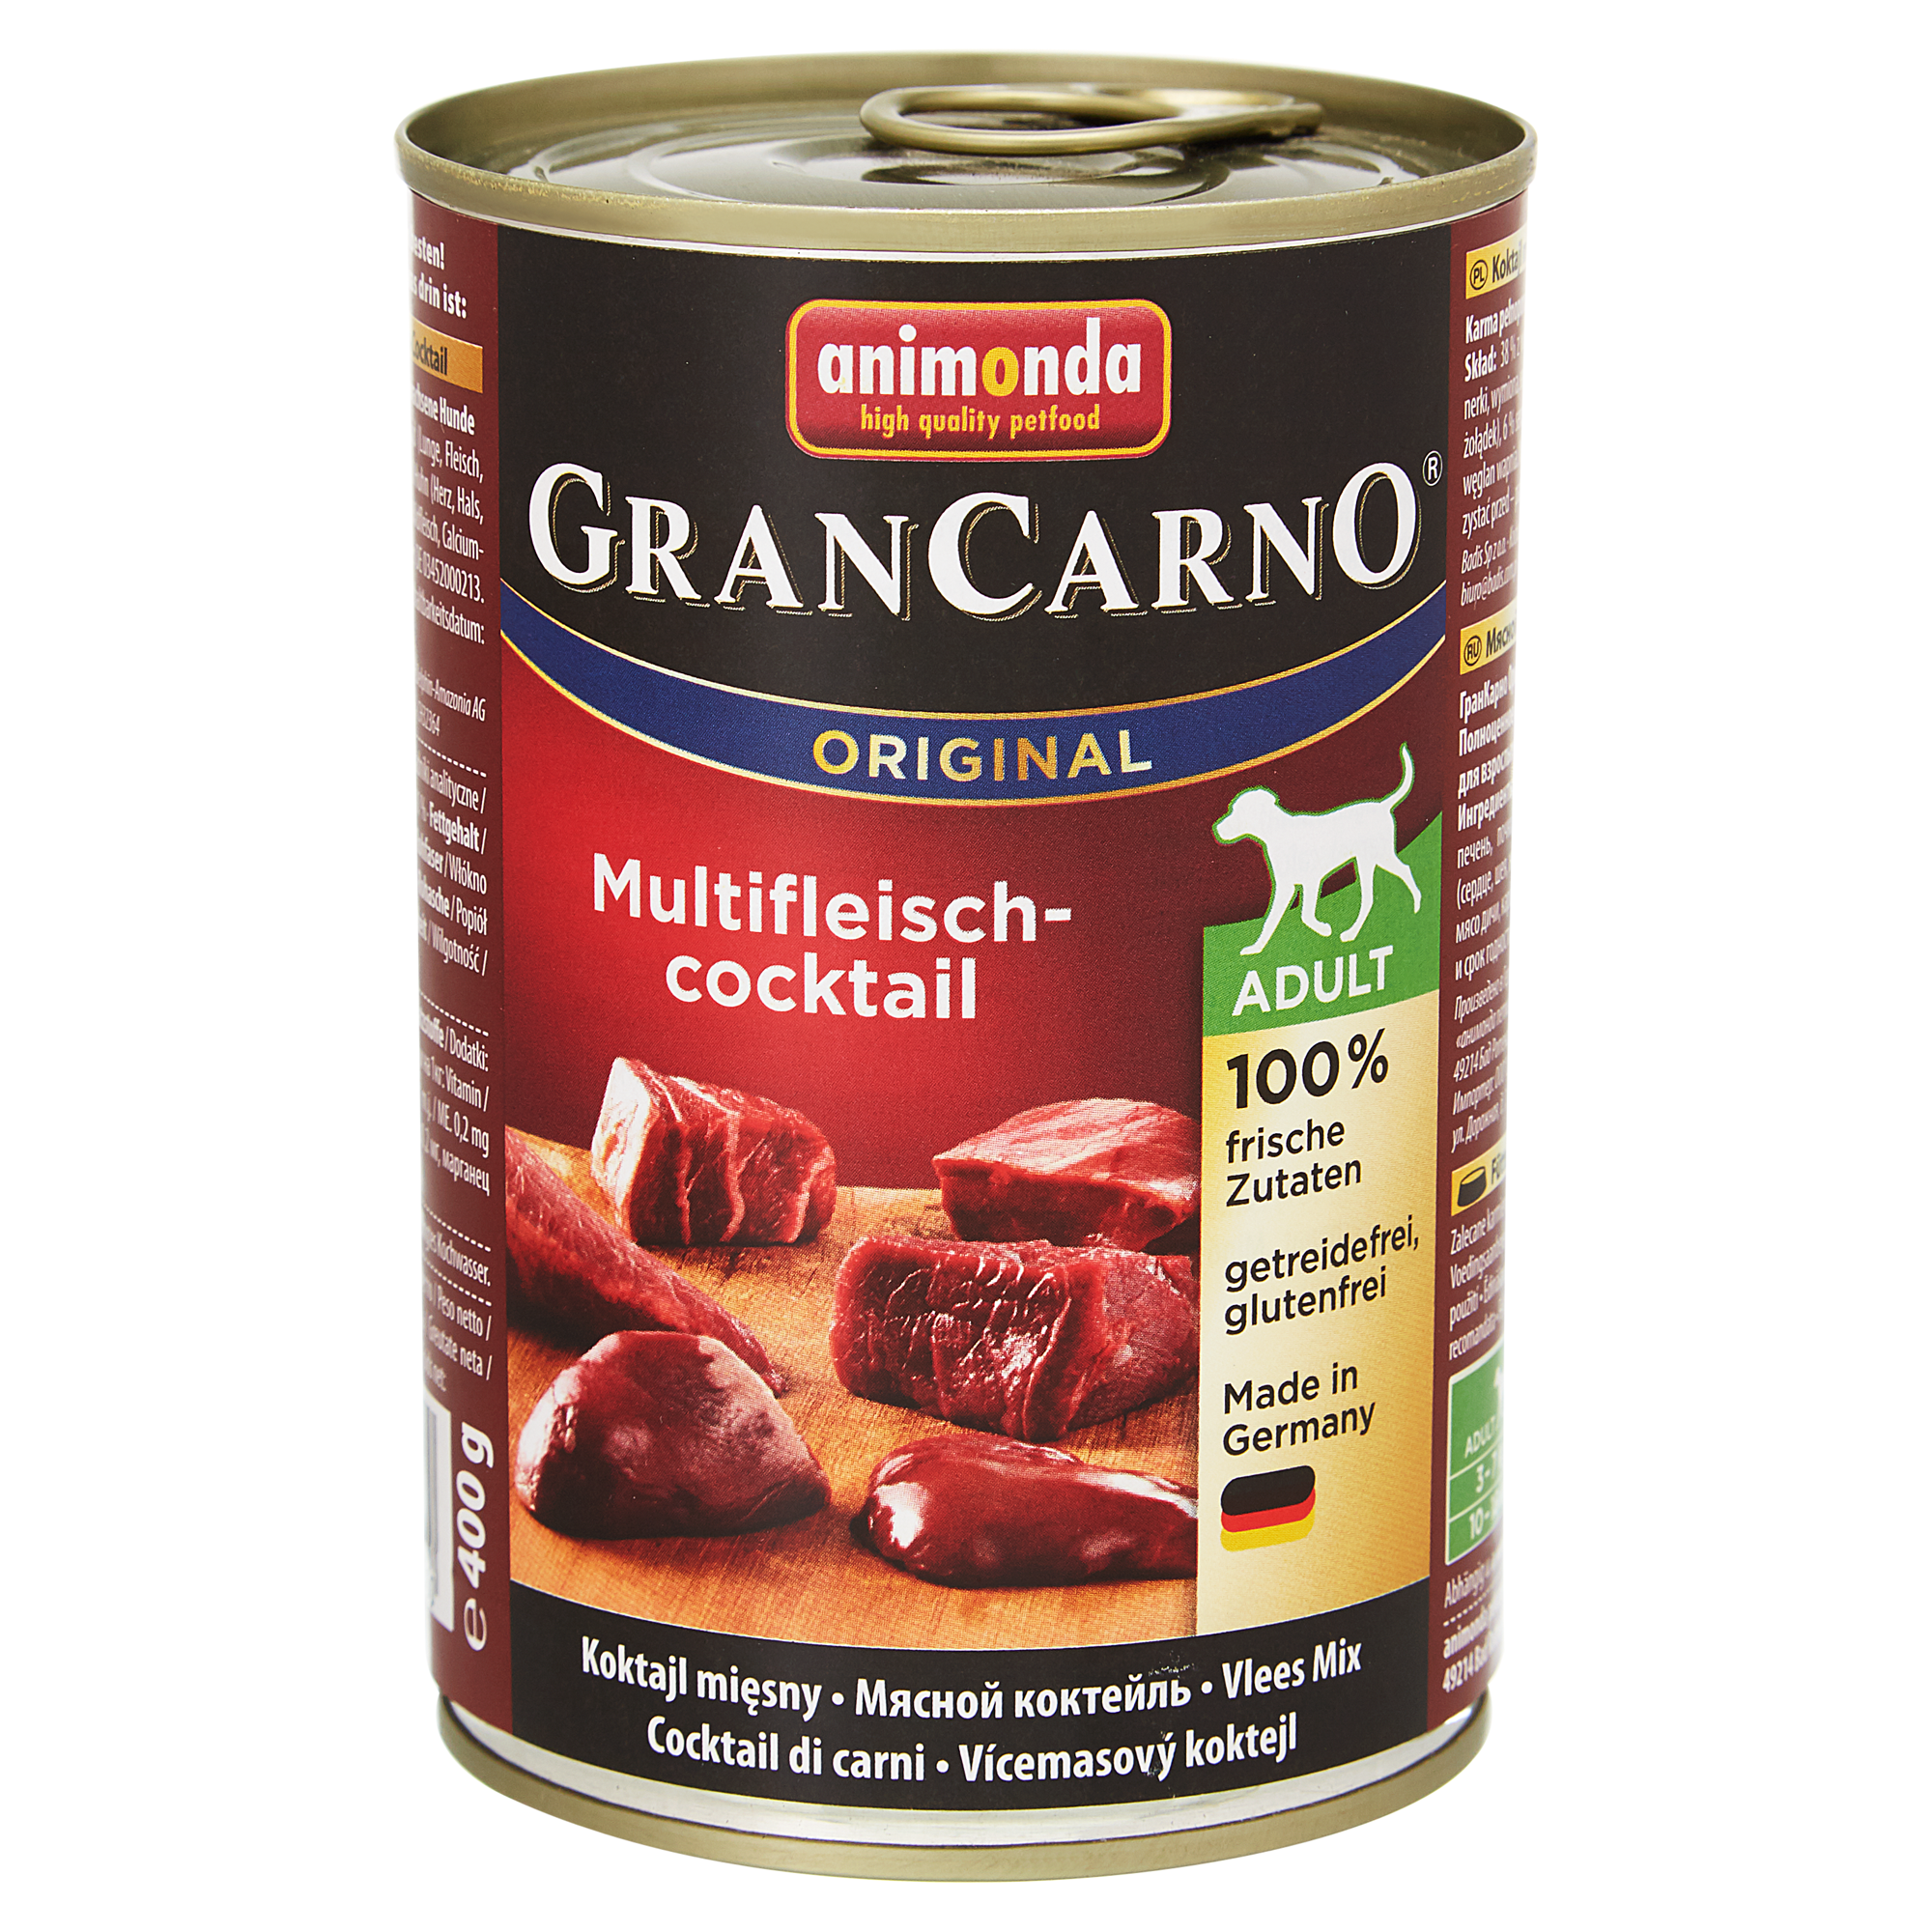 Hundenassfutter "Gran Carno" Original Multifleischcocktail 400 g + product picture